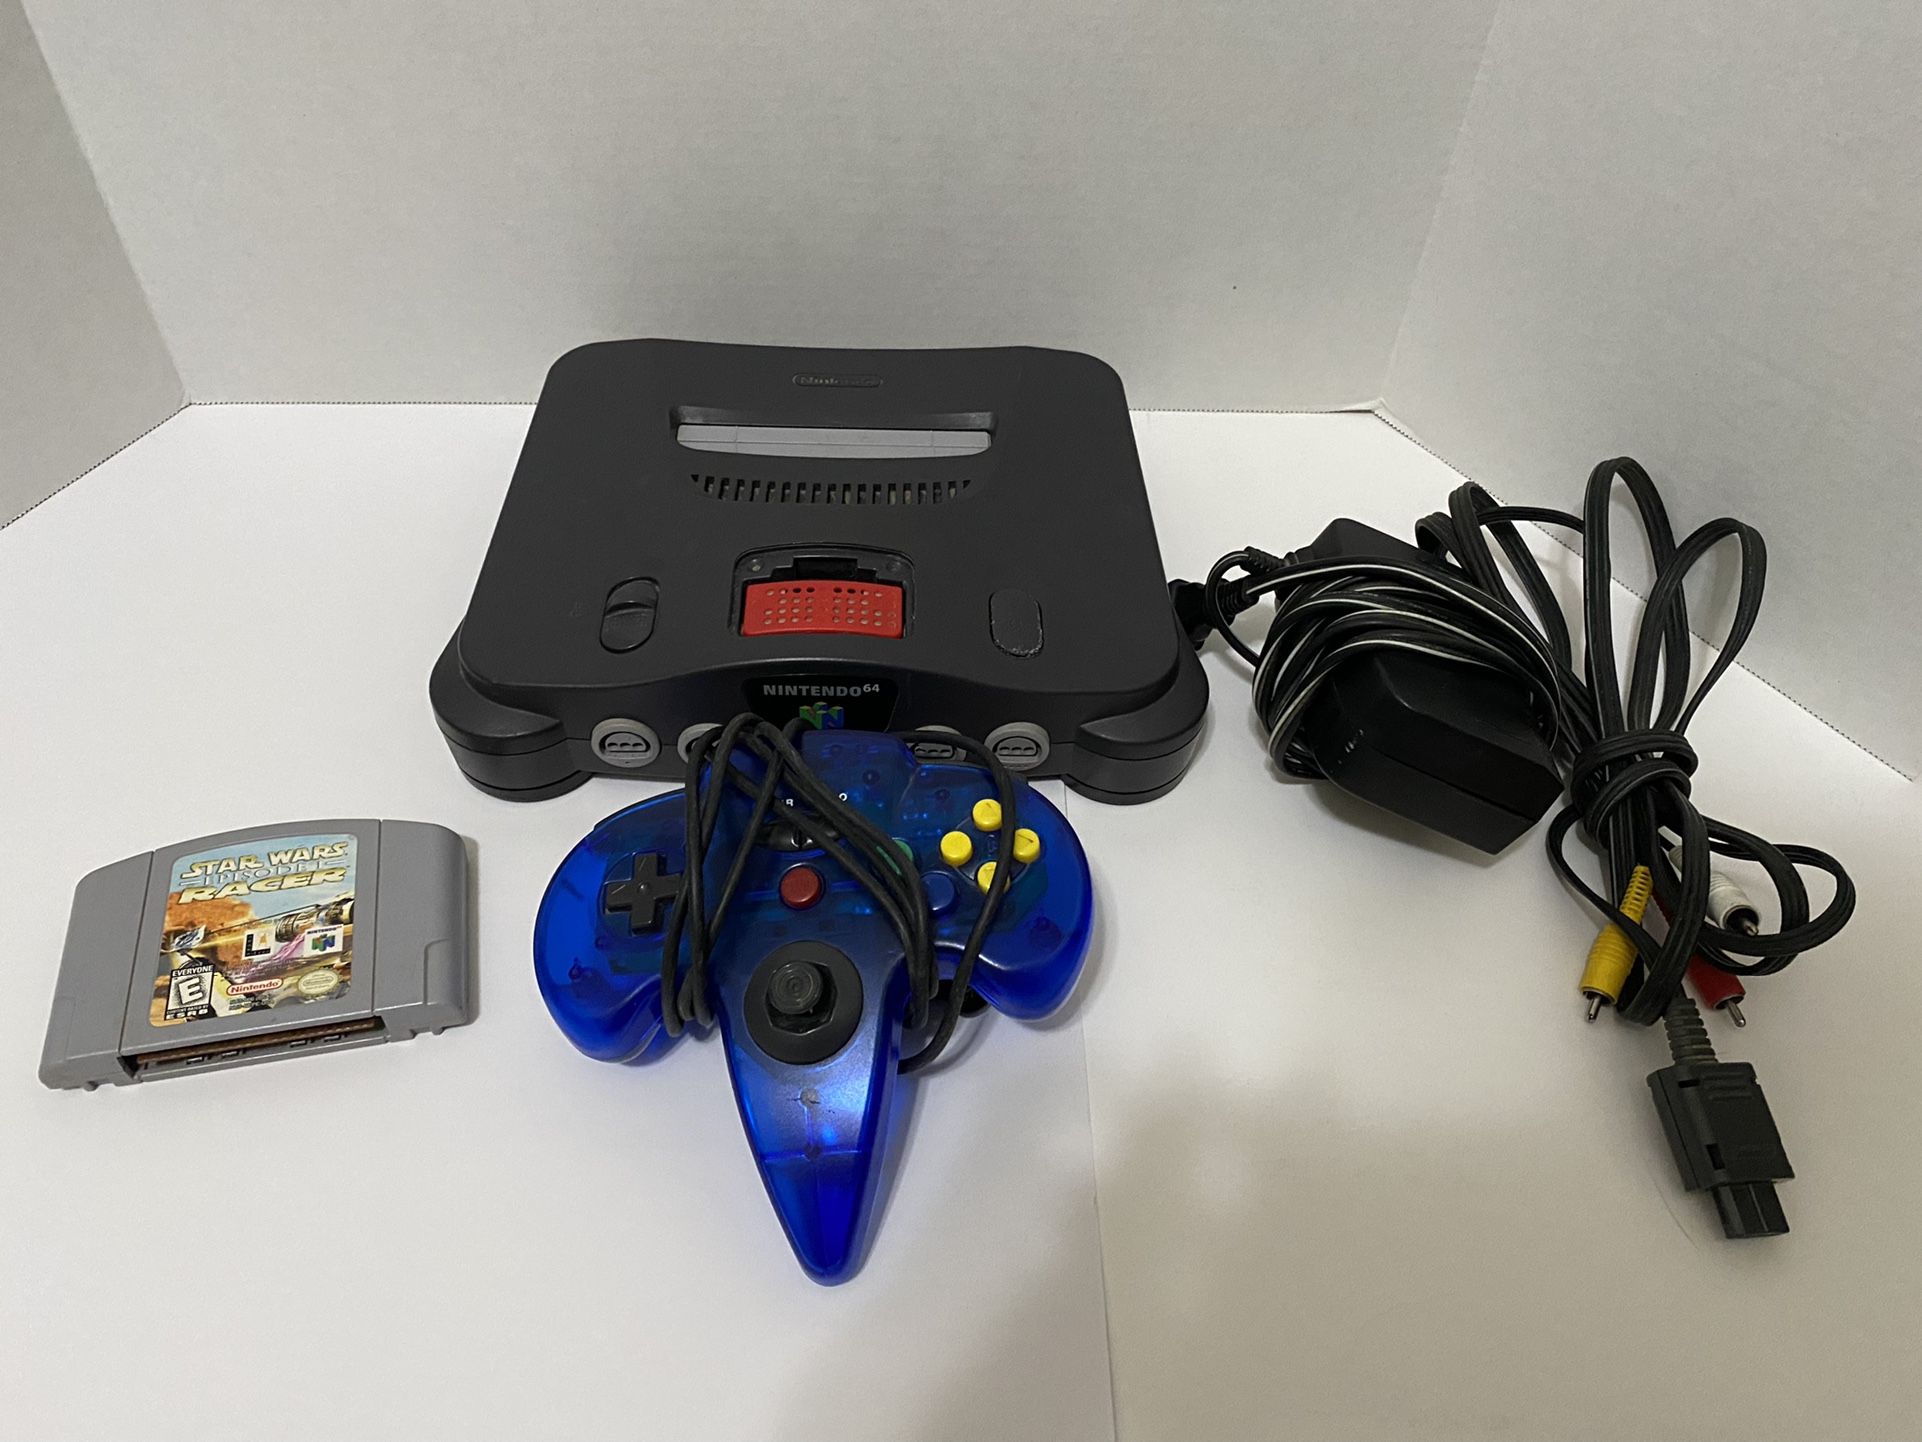 Nintendo 64/Game